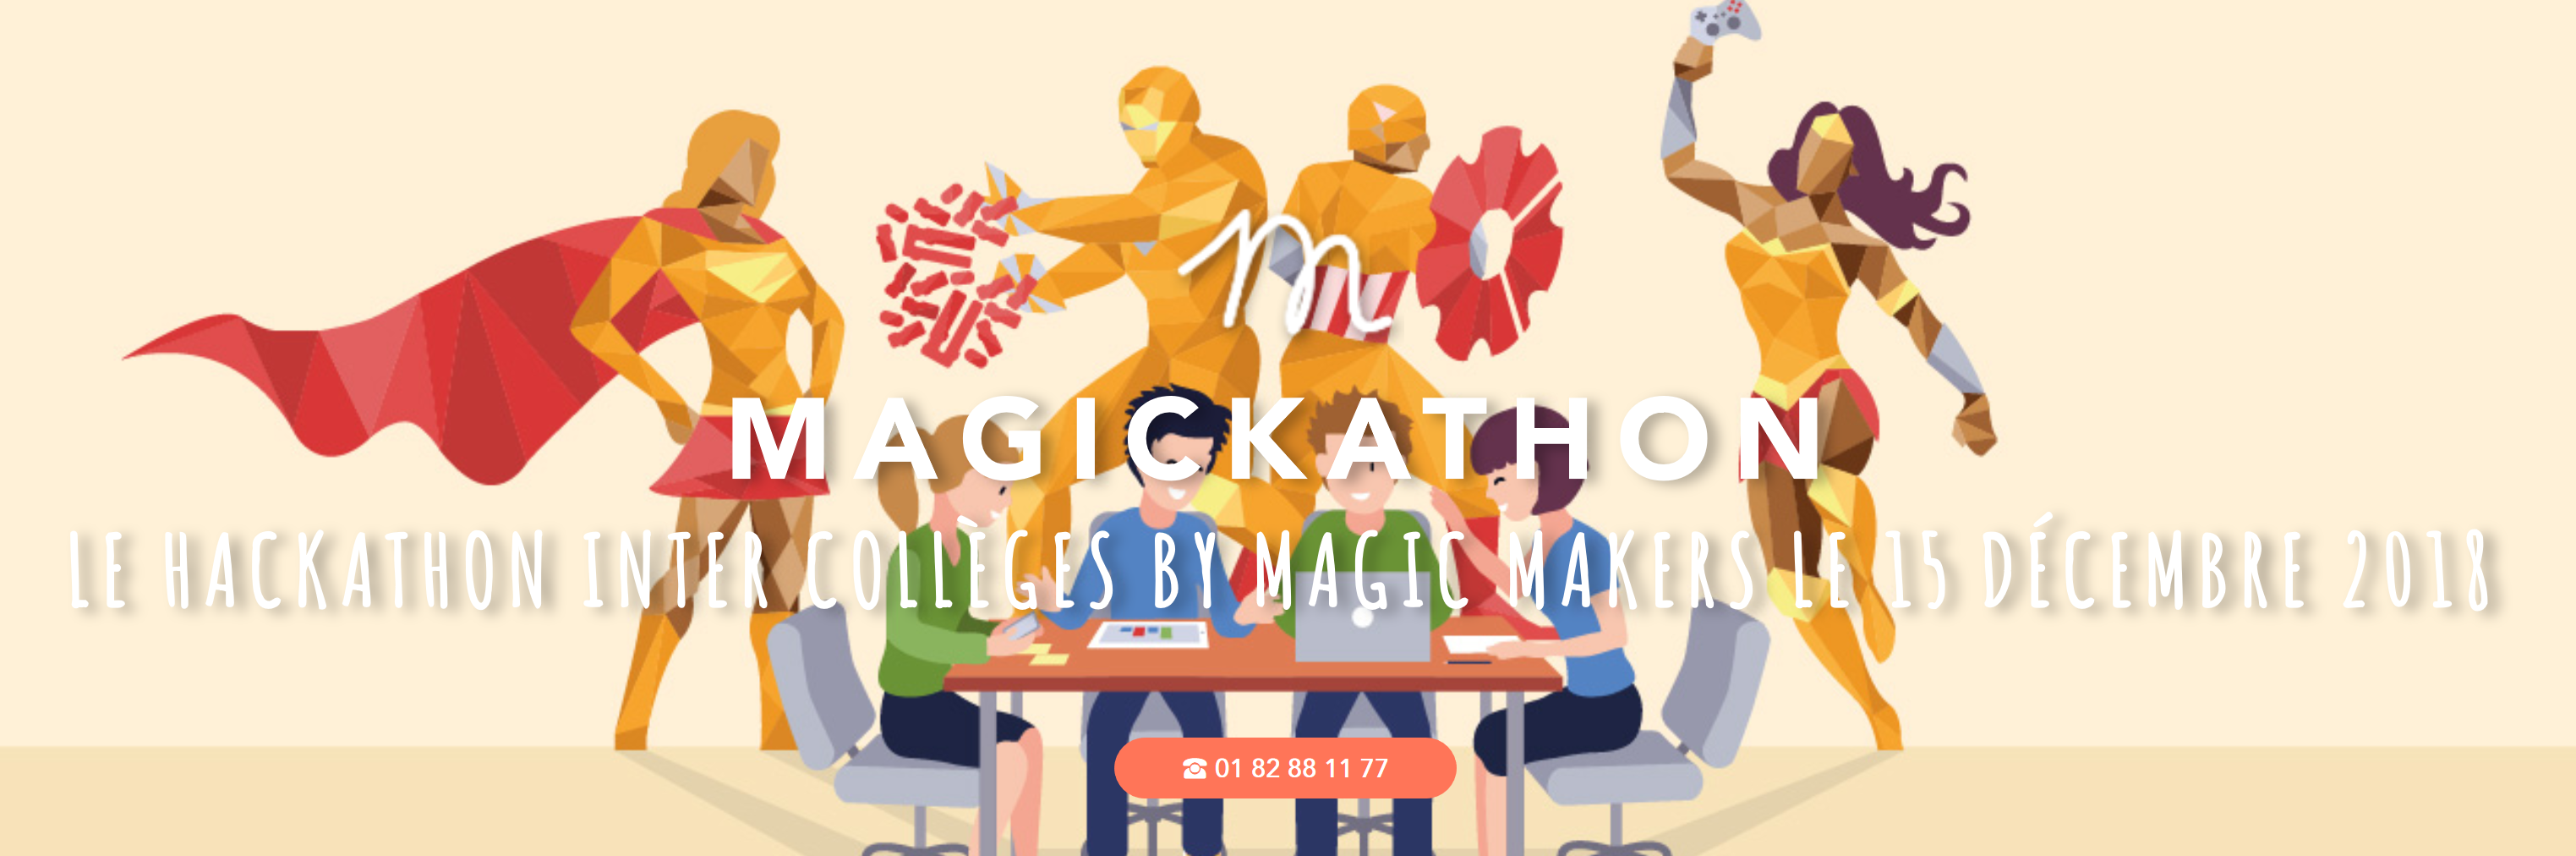 Hackathon Magic Makers Paris 2018